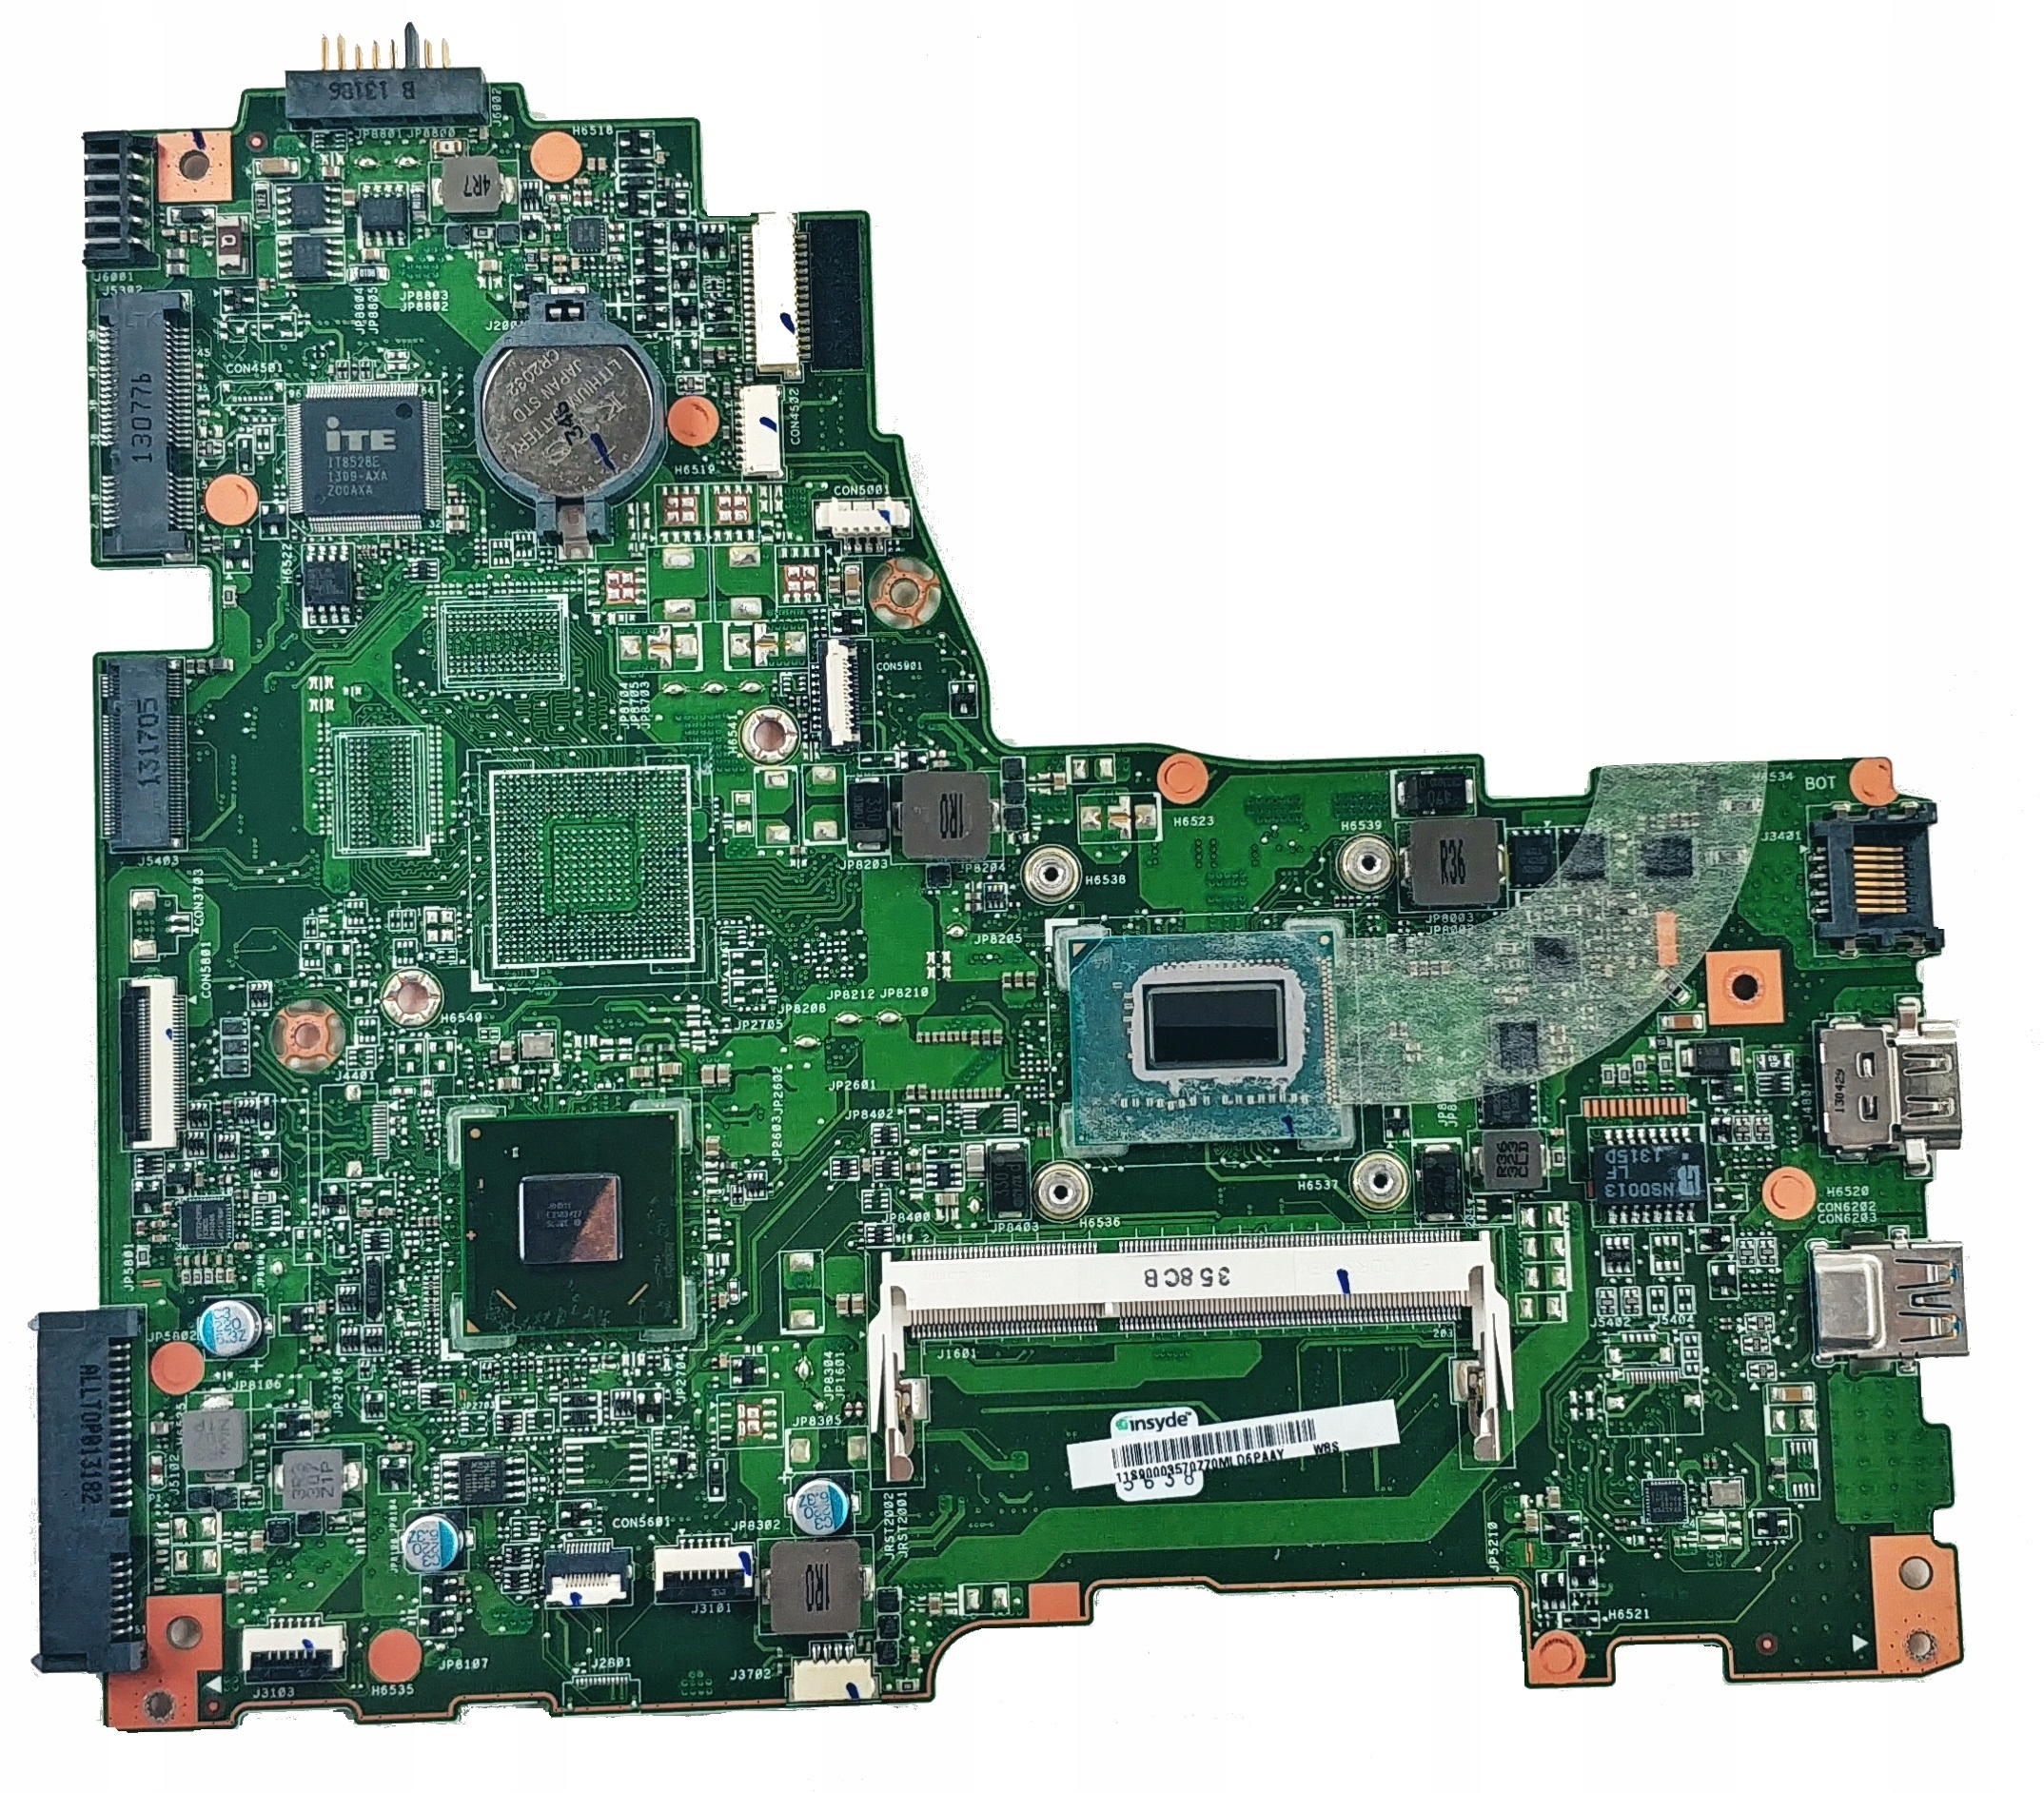 Nvidia geforce gt 720m драйвер. Gt 720m. Видеокарта NVIDIA GEFORCE gt 720m. E89382 HANNSTAR J MV-4 94v-0. I365ms 1.0 материнская плата Lenovo.